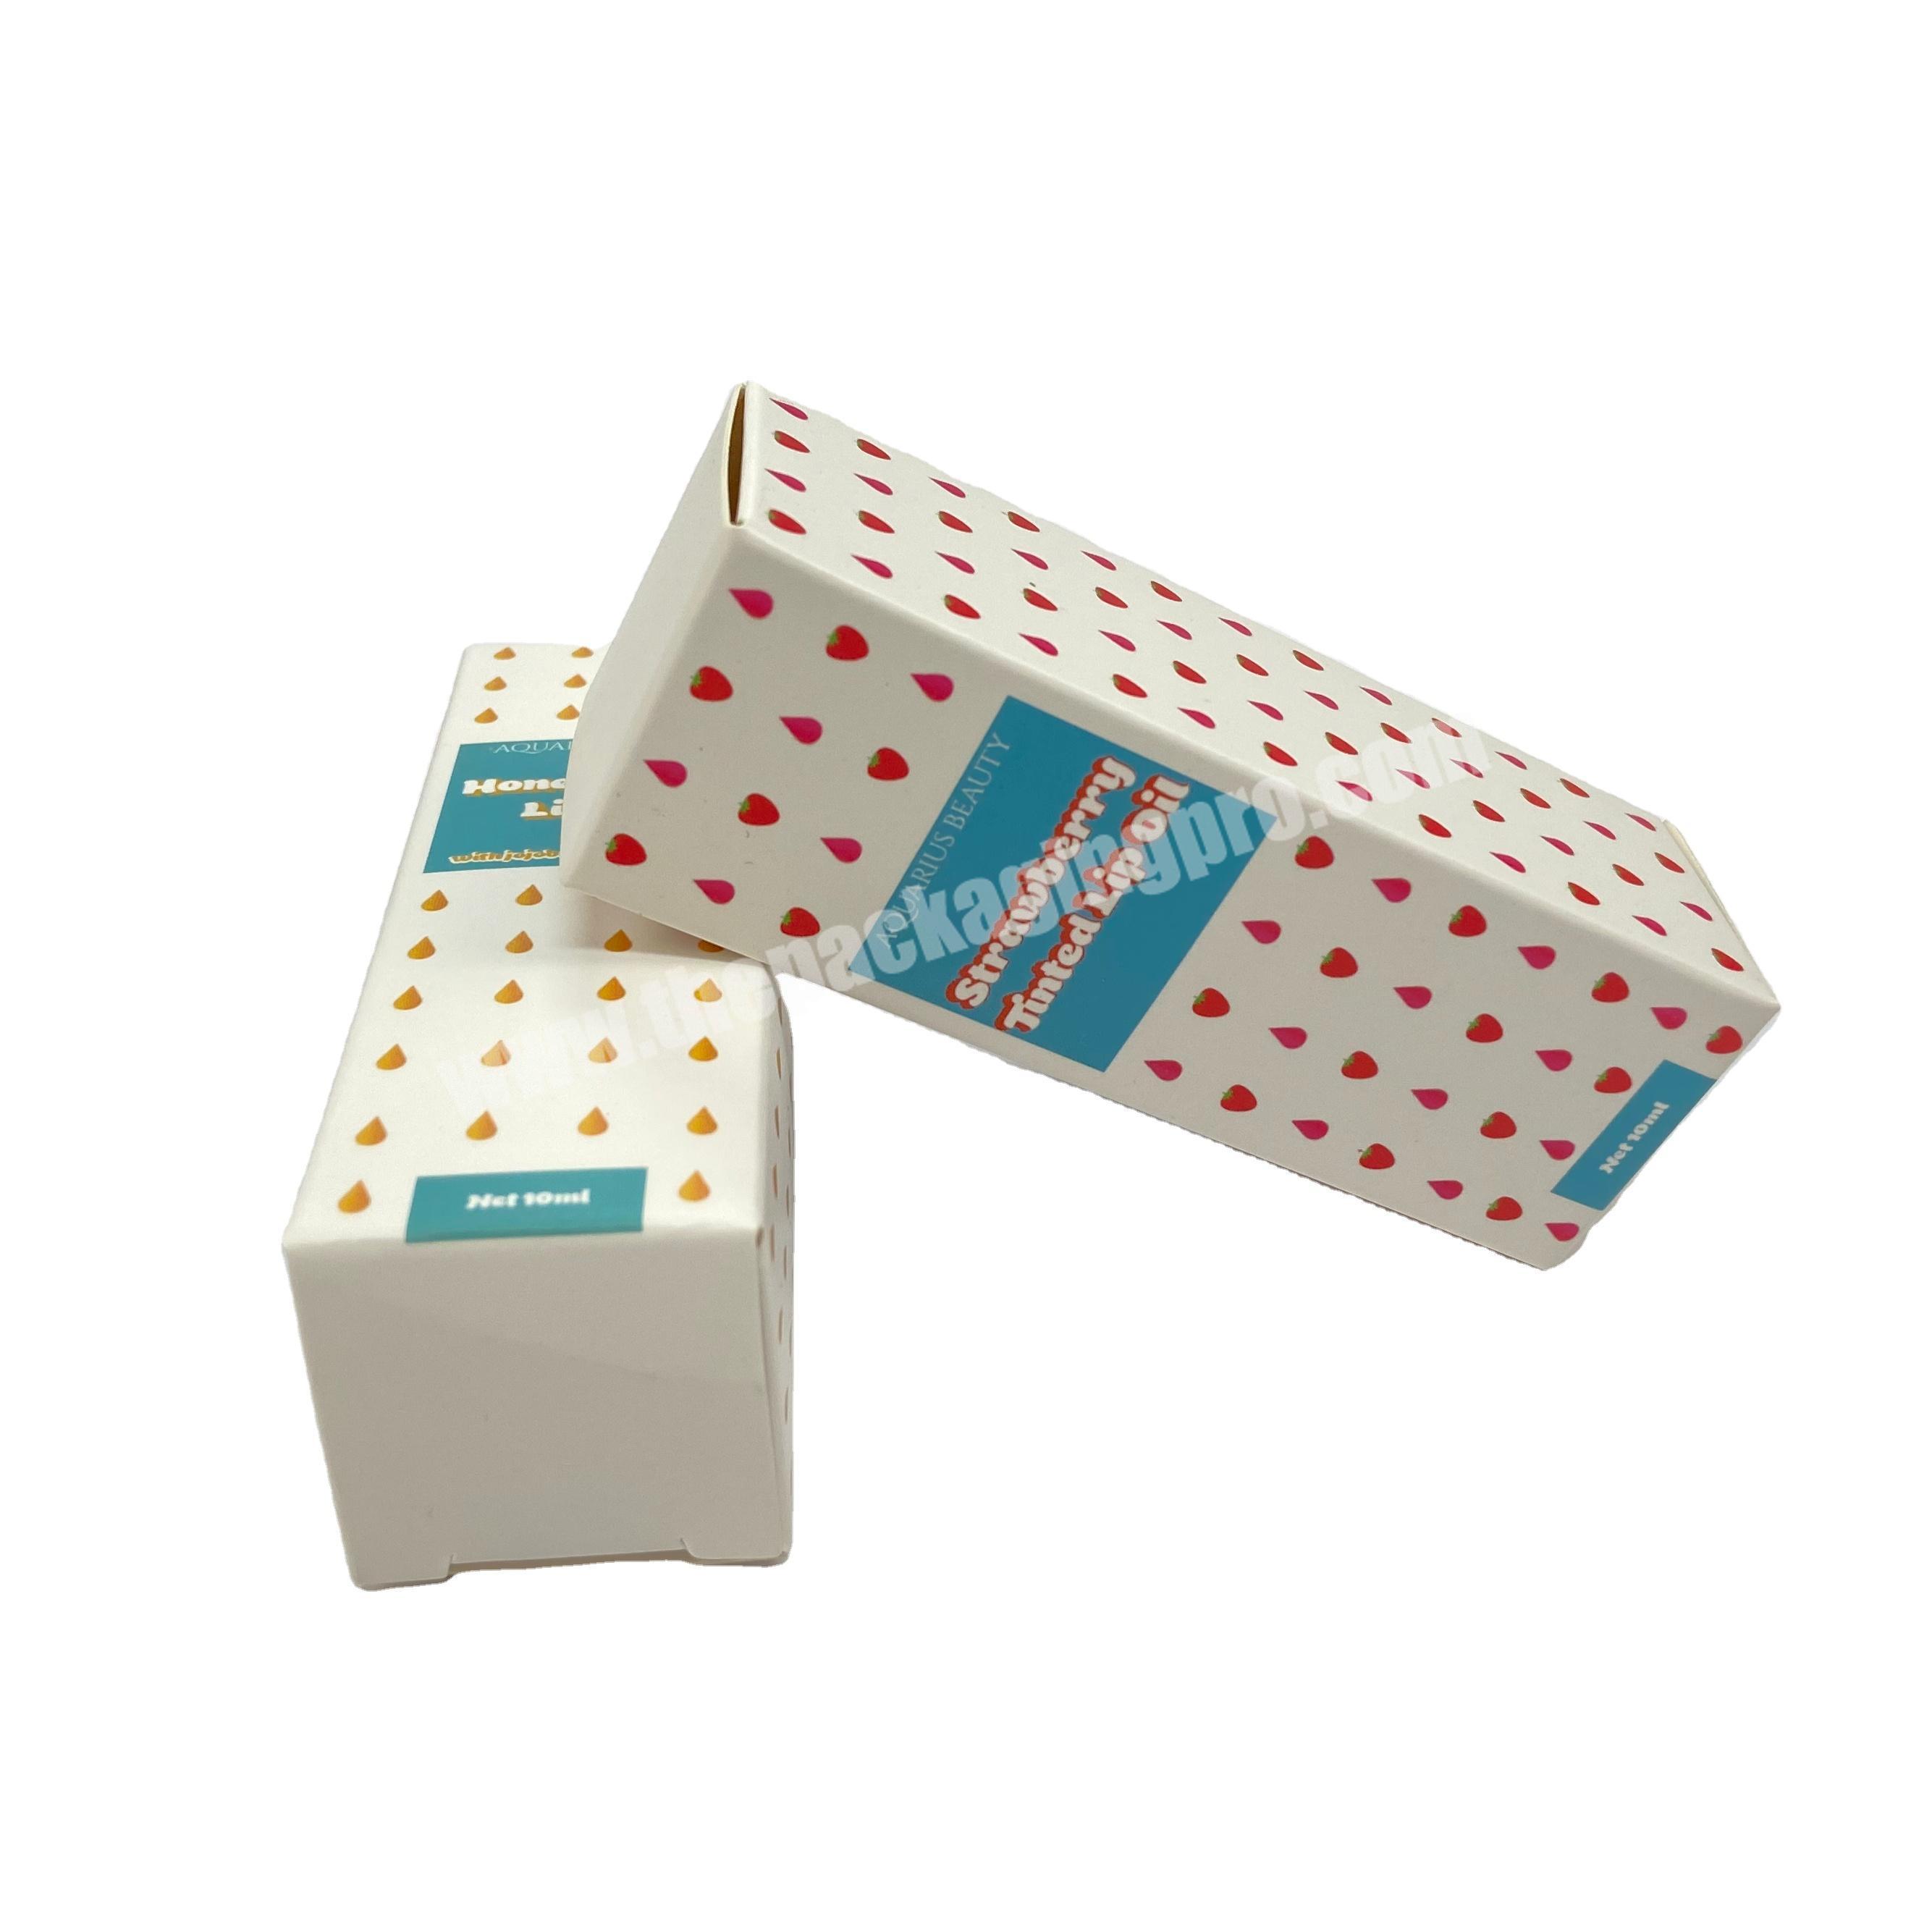 Cheap paper packaging eyelash cardboard box lipsticks folding carton skincare cosmetics lip gloss eco friendly boxes for makeup